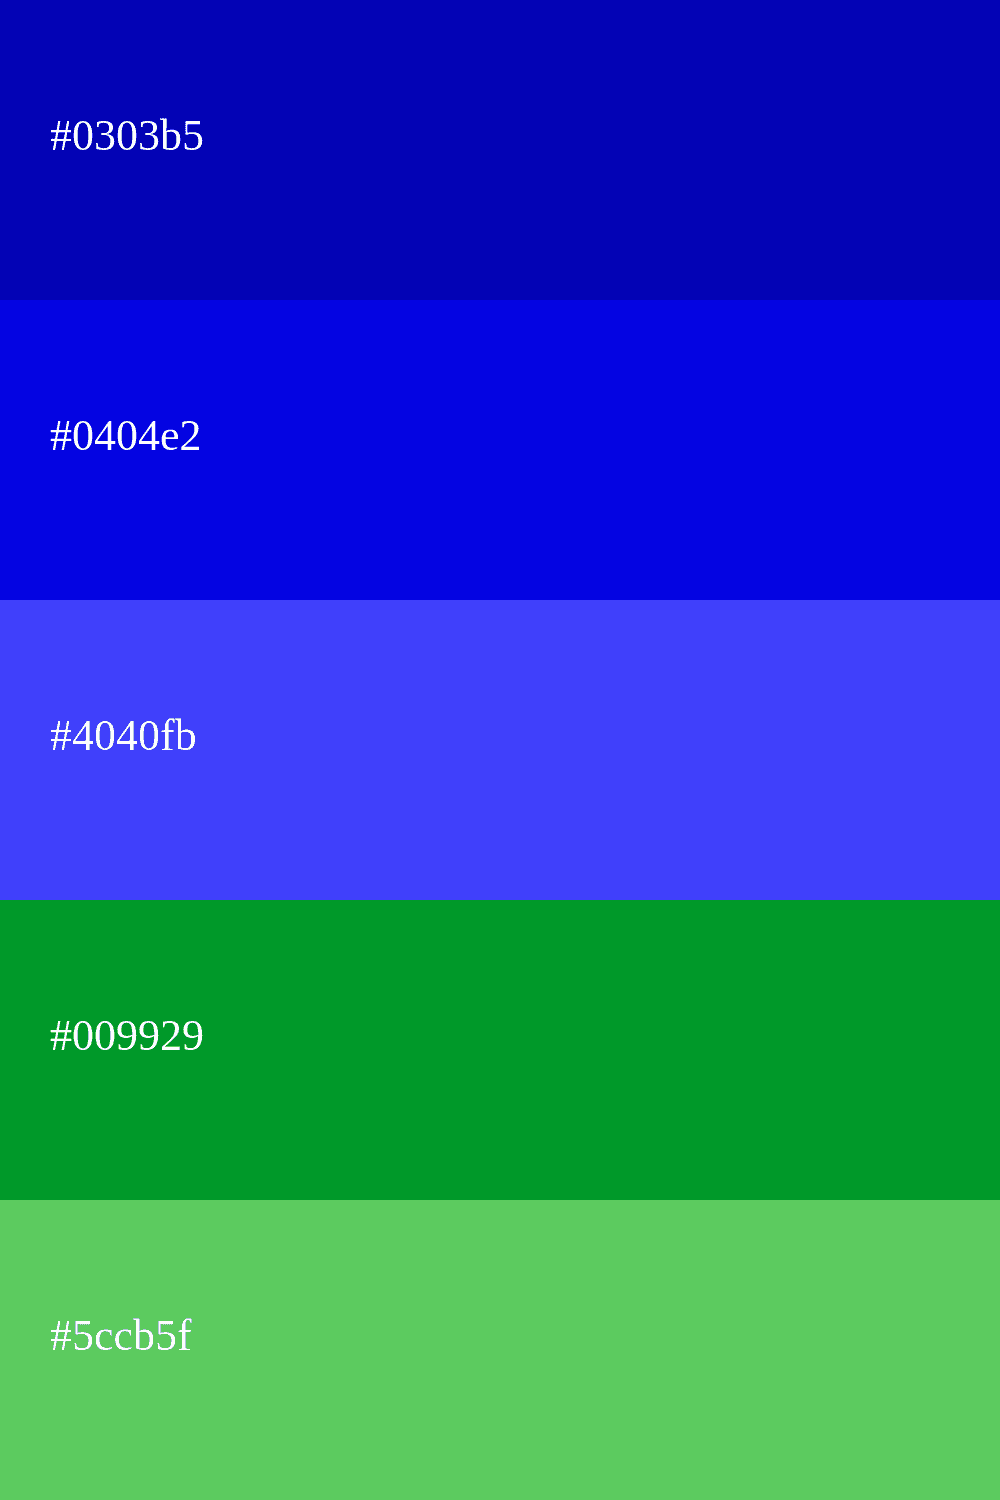 royal blue and green